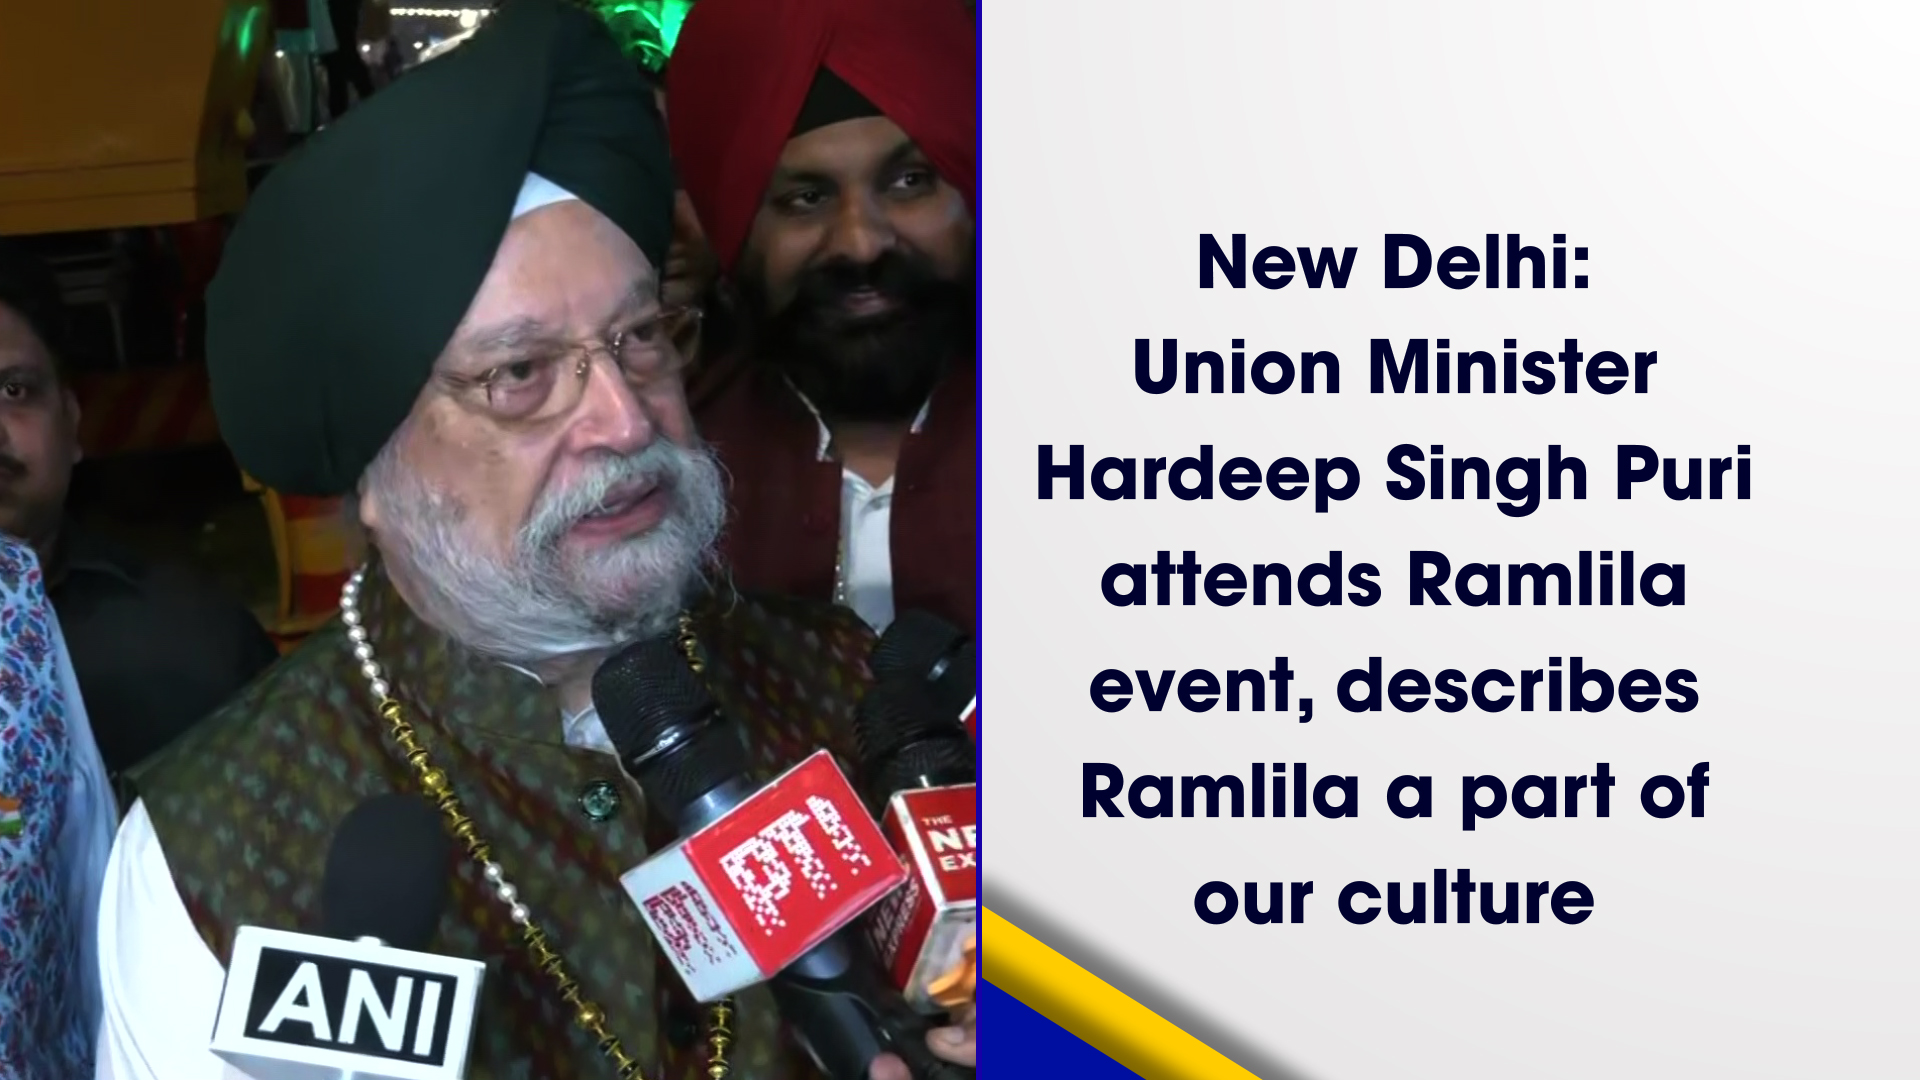 New Delhi: Union Minister Hardeep Singh Puri attends Ramlila event, describes Ramlila a part of our culture